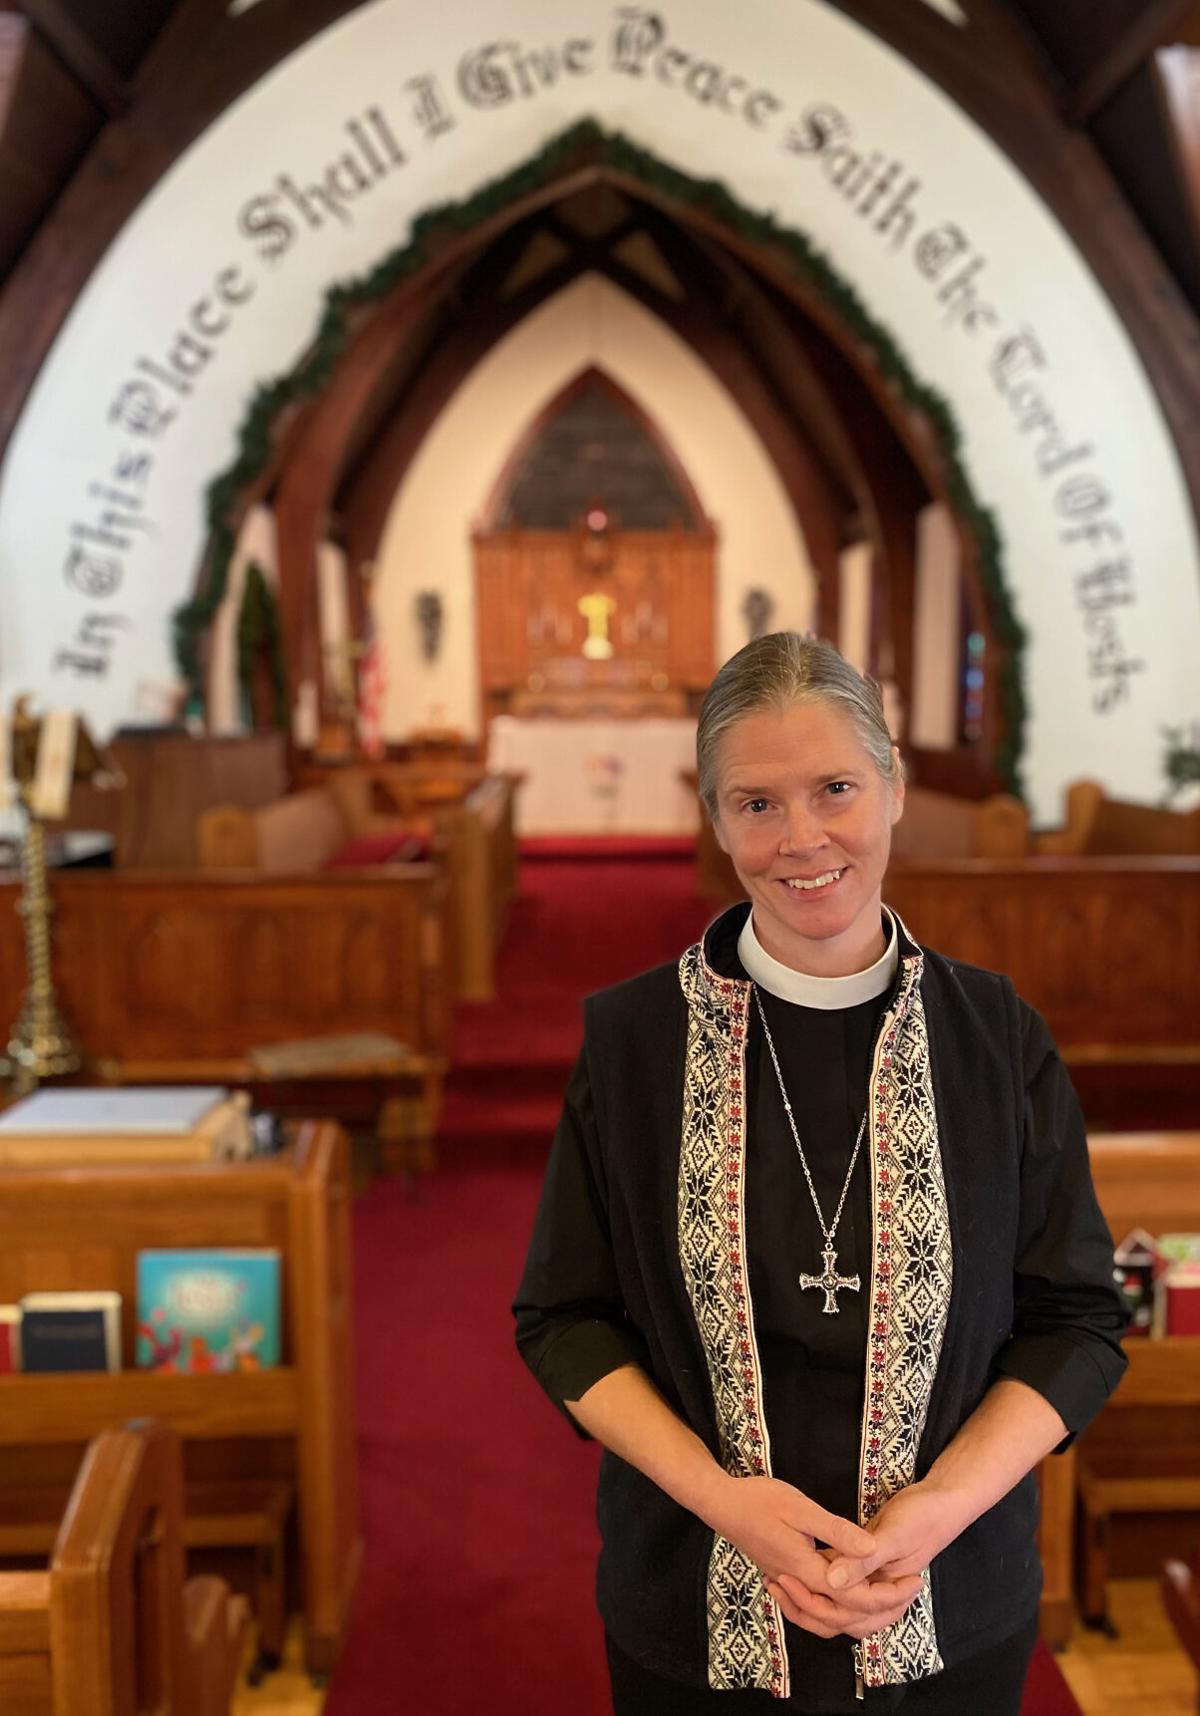 The Rev. Kerri Meyer